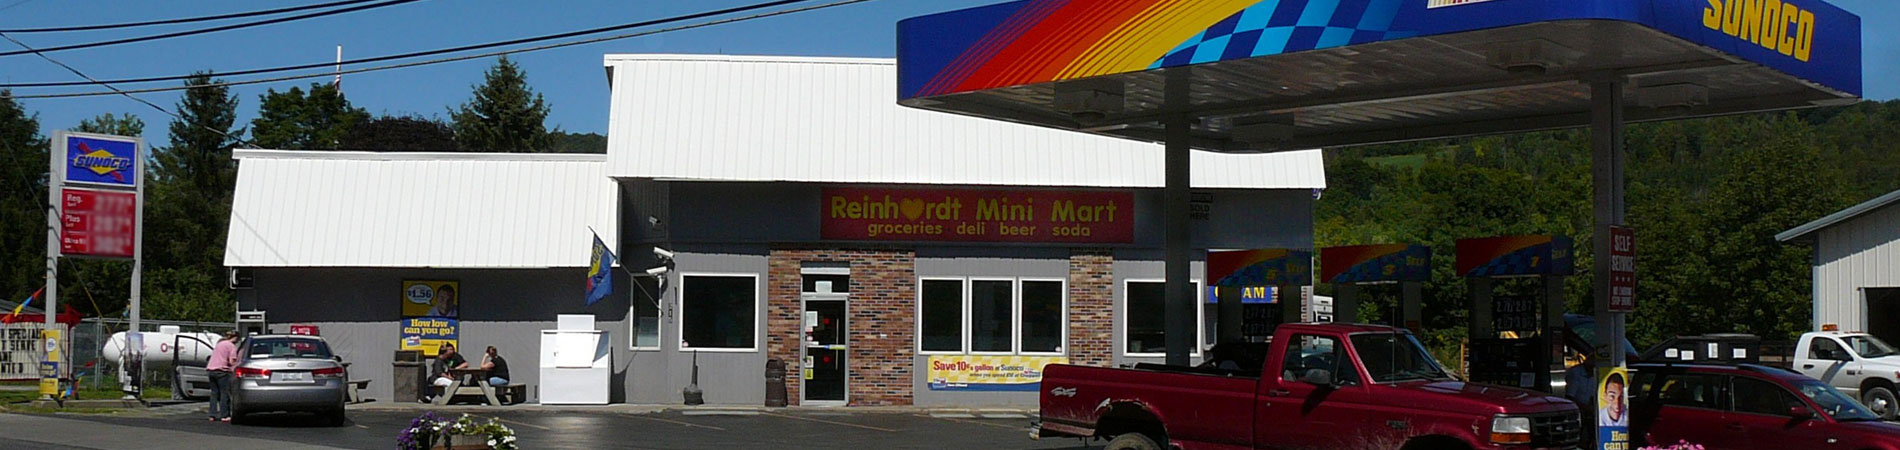 Reinhardt Minimart exterior and fuel pumps